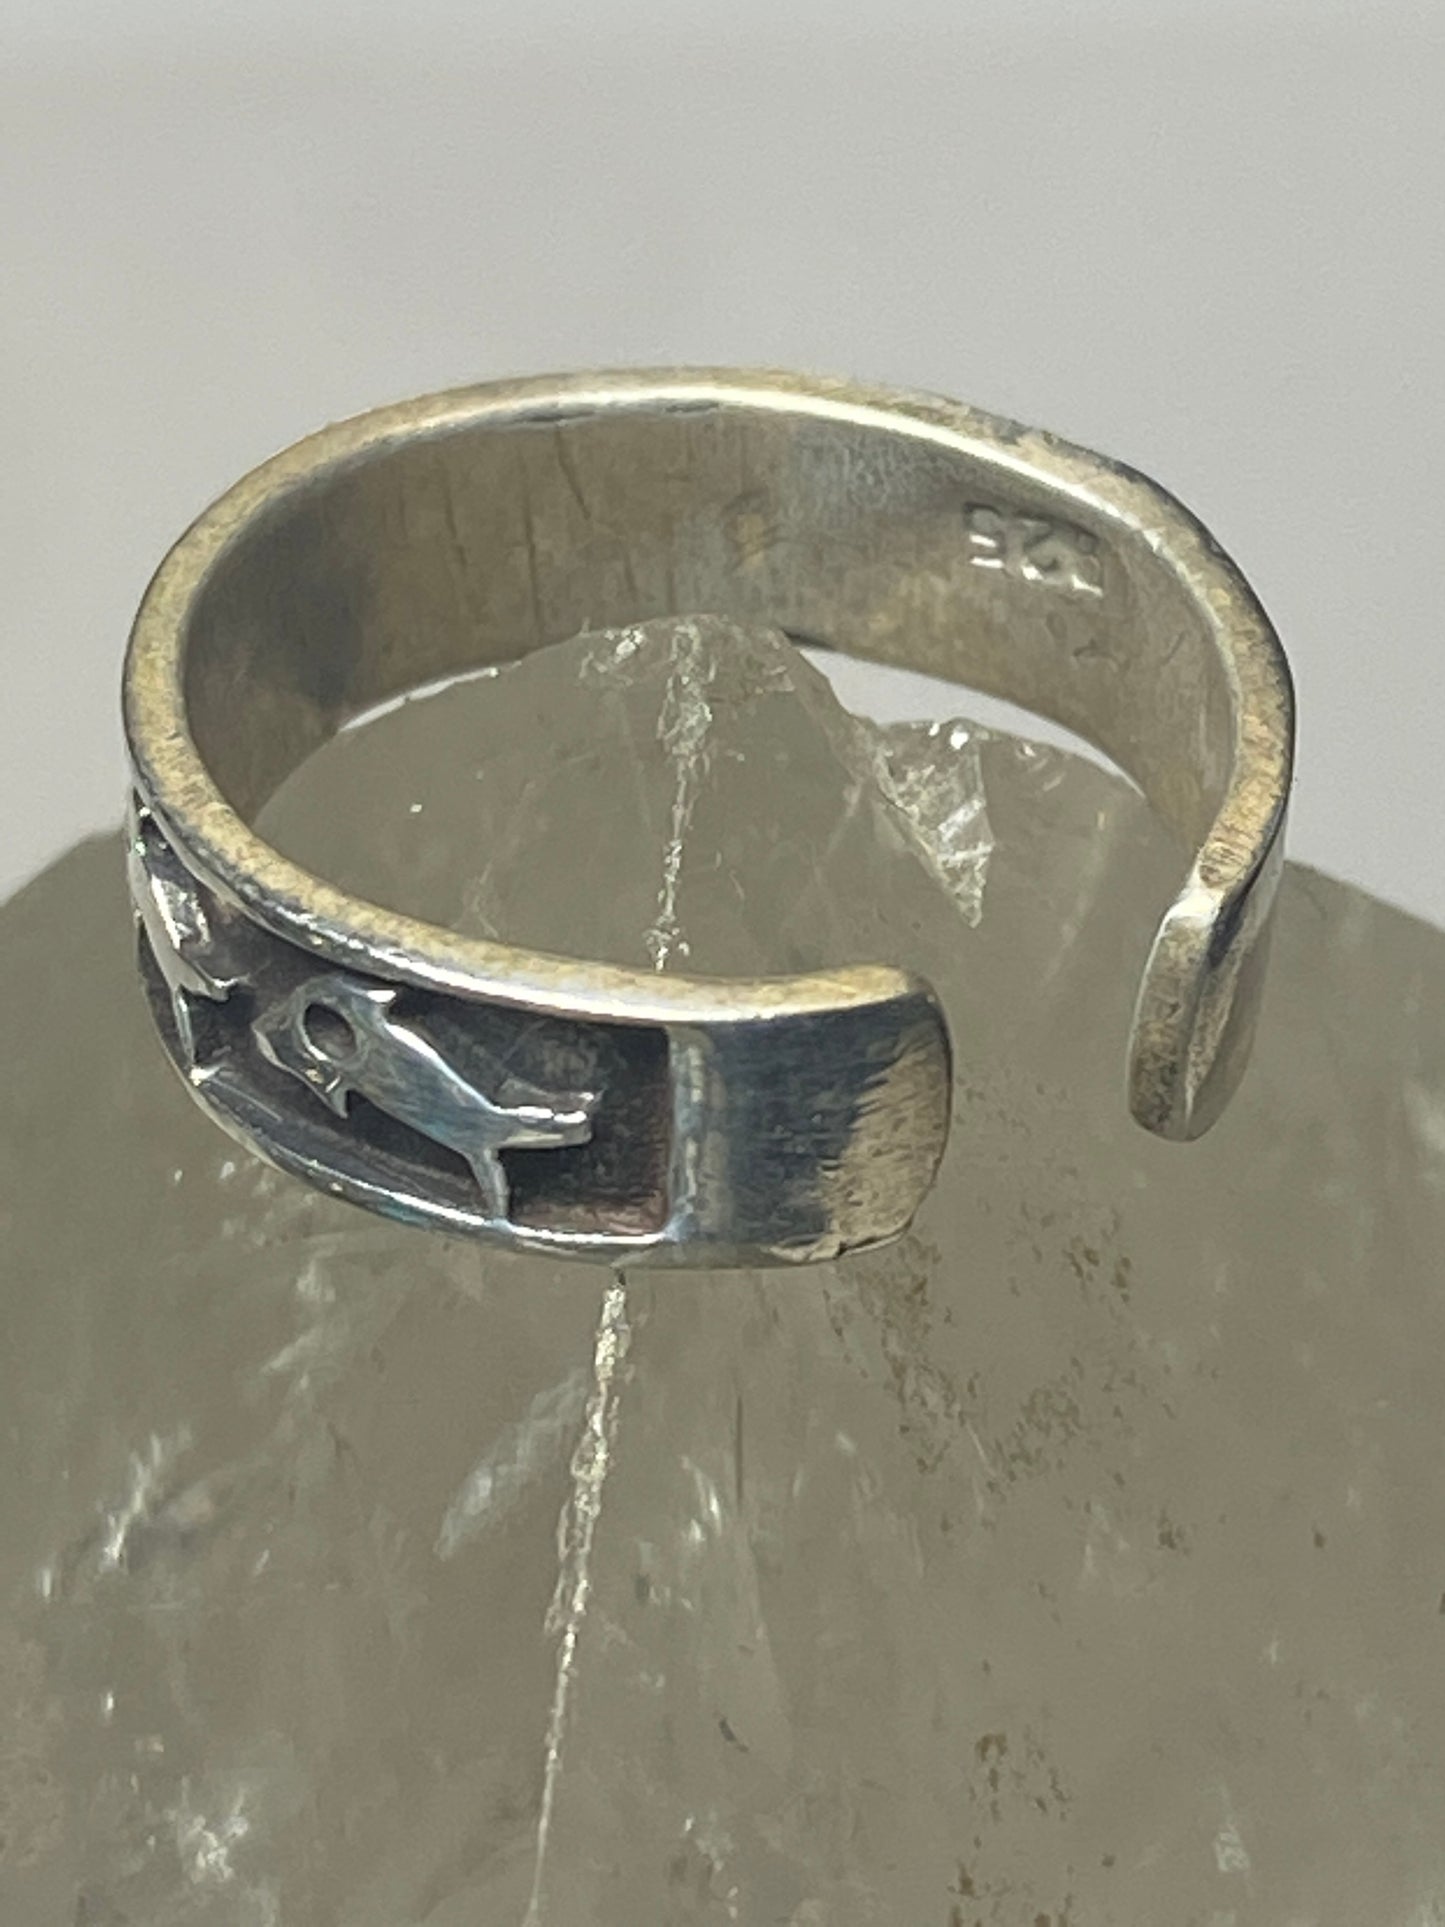 Toe ring dolphin band ocean sterling silver women girls